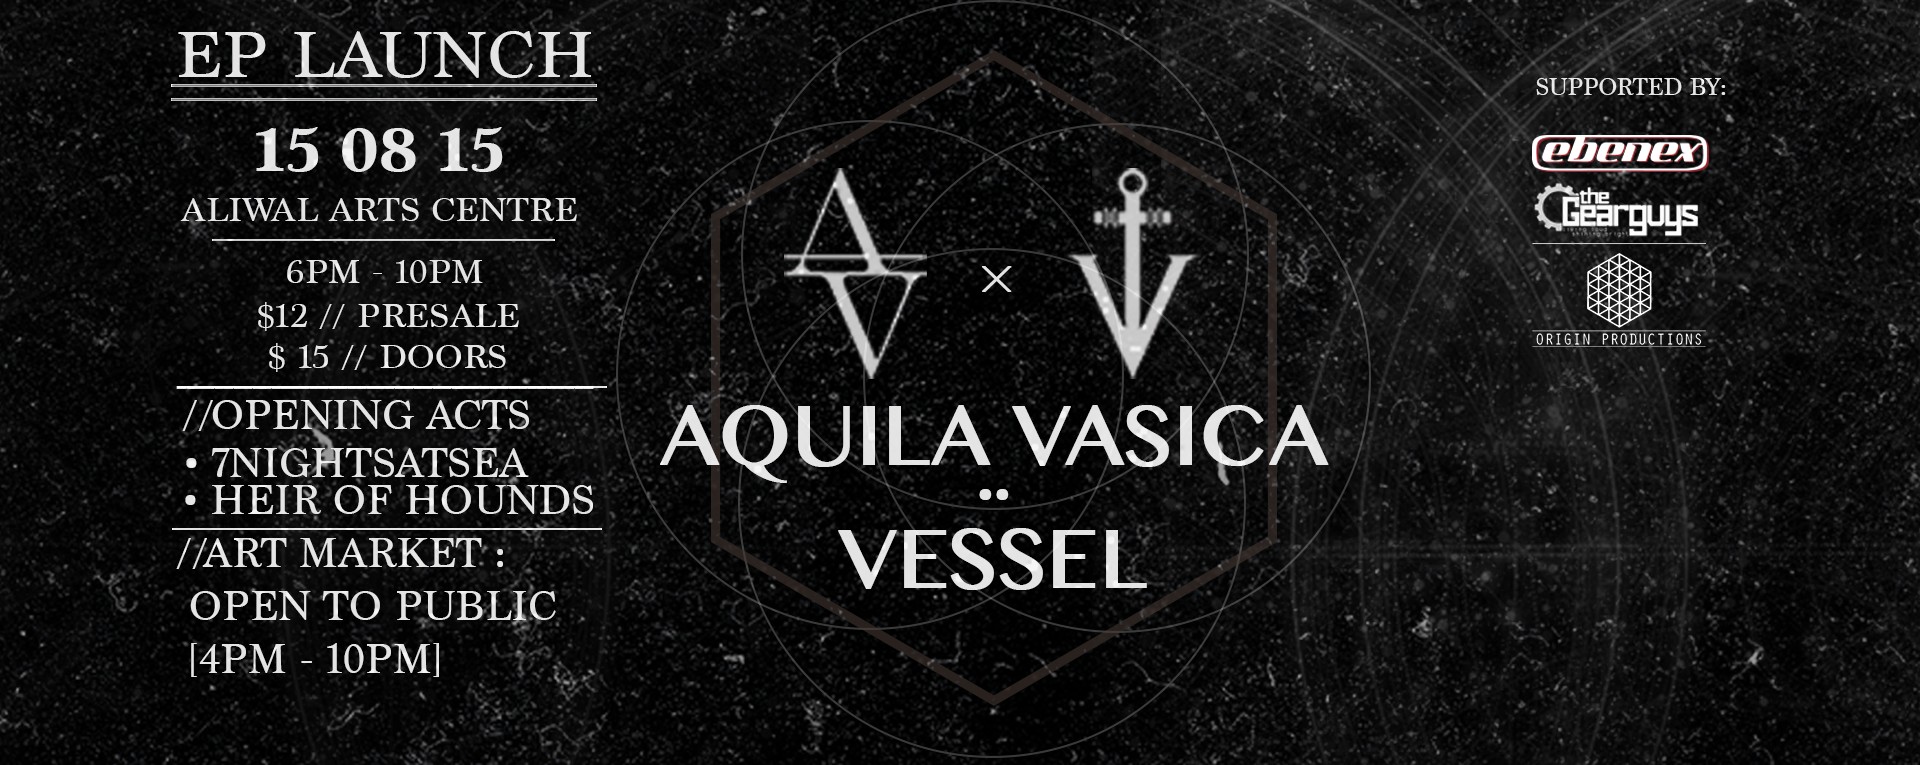 EP LAUNCH: AQUILA VASICA x VESSEL